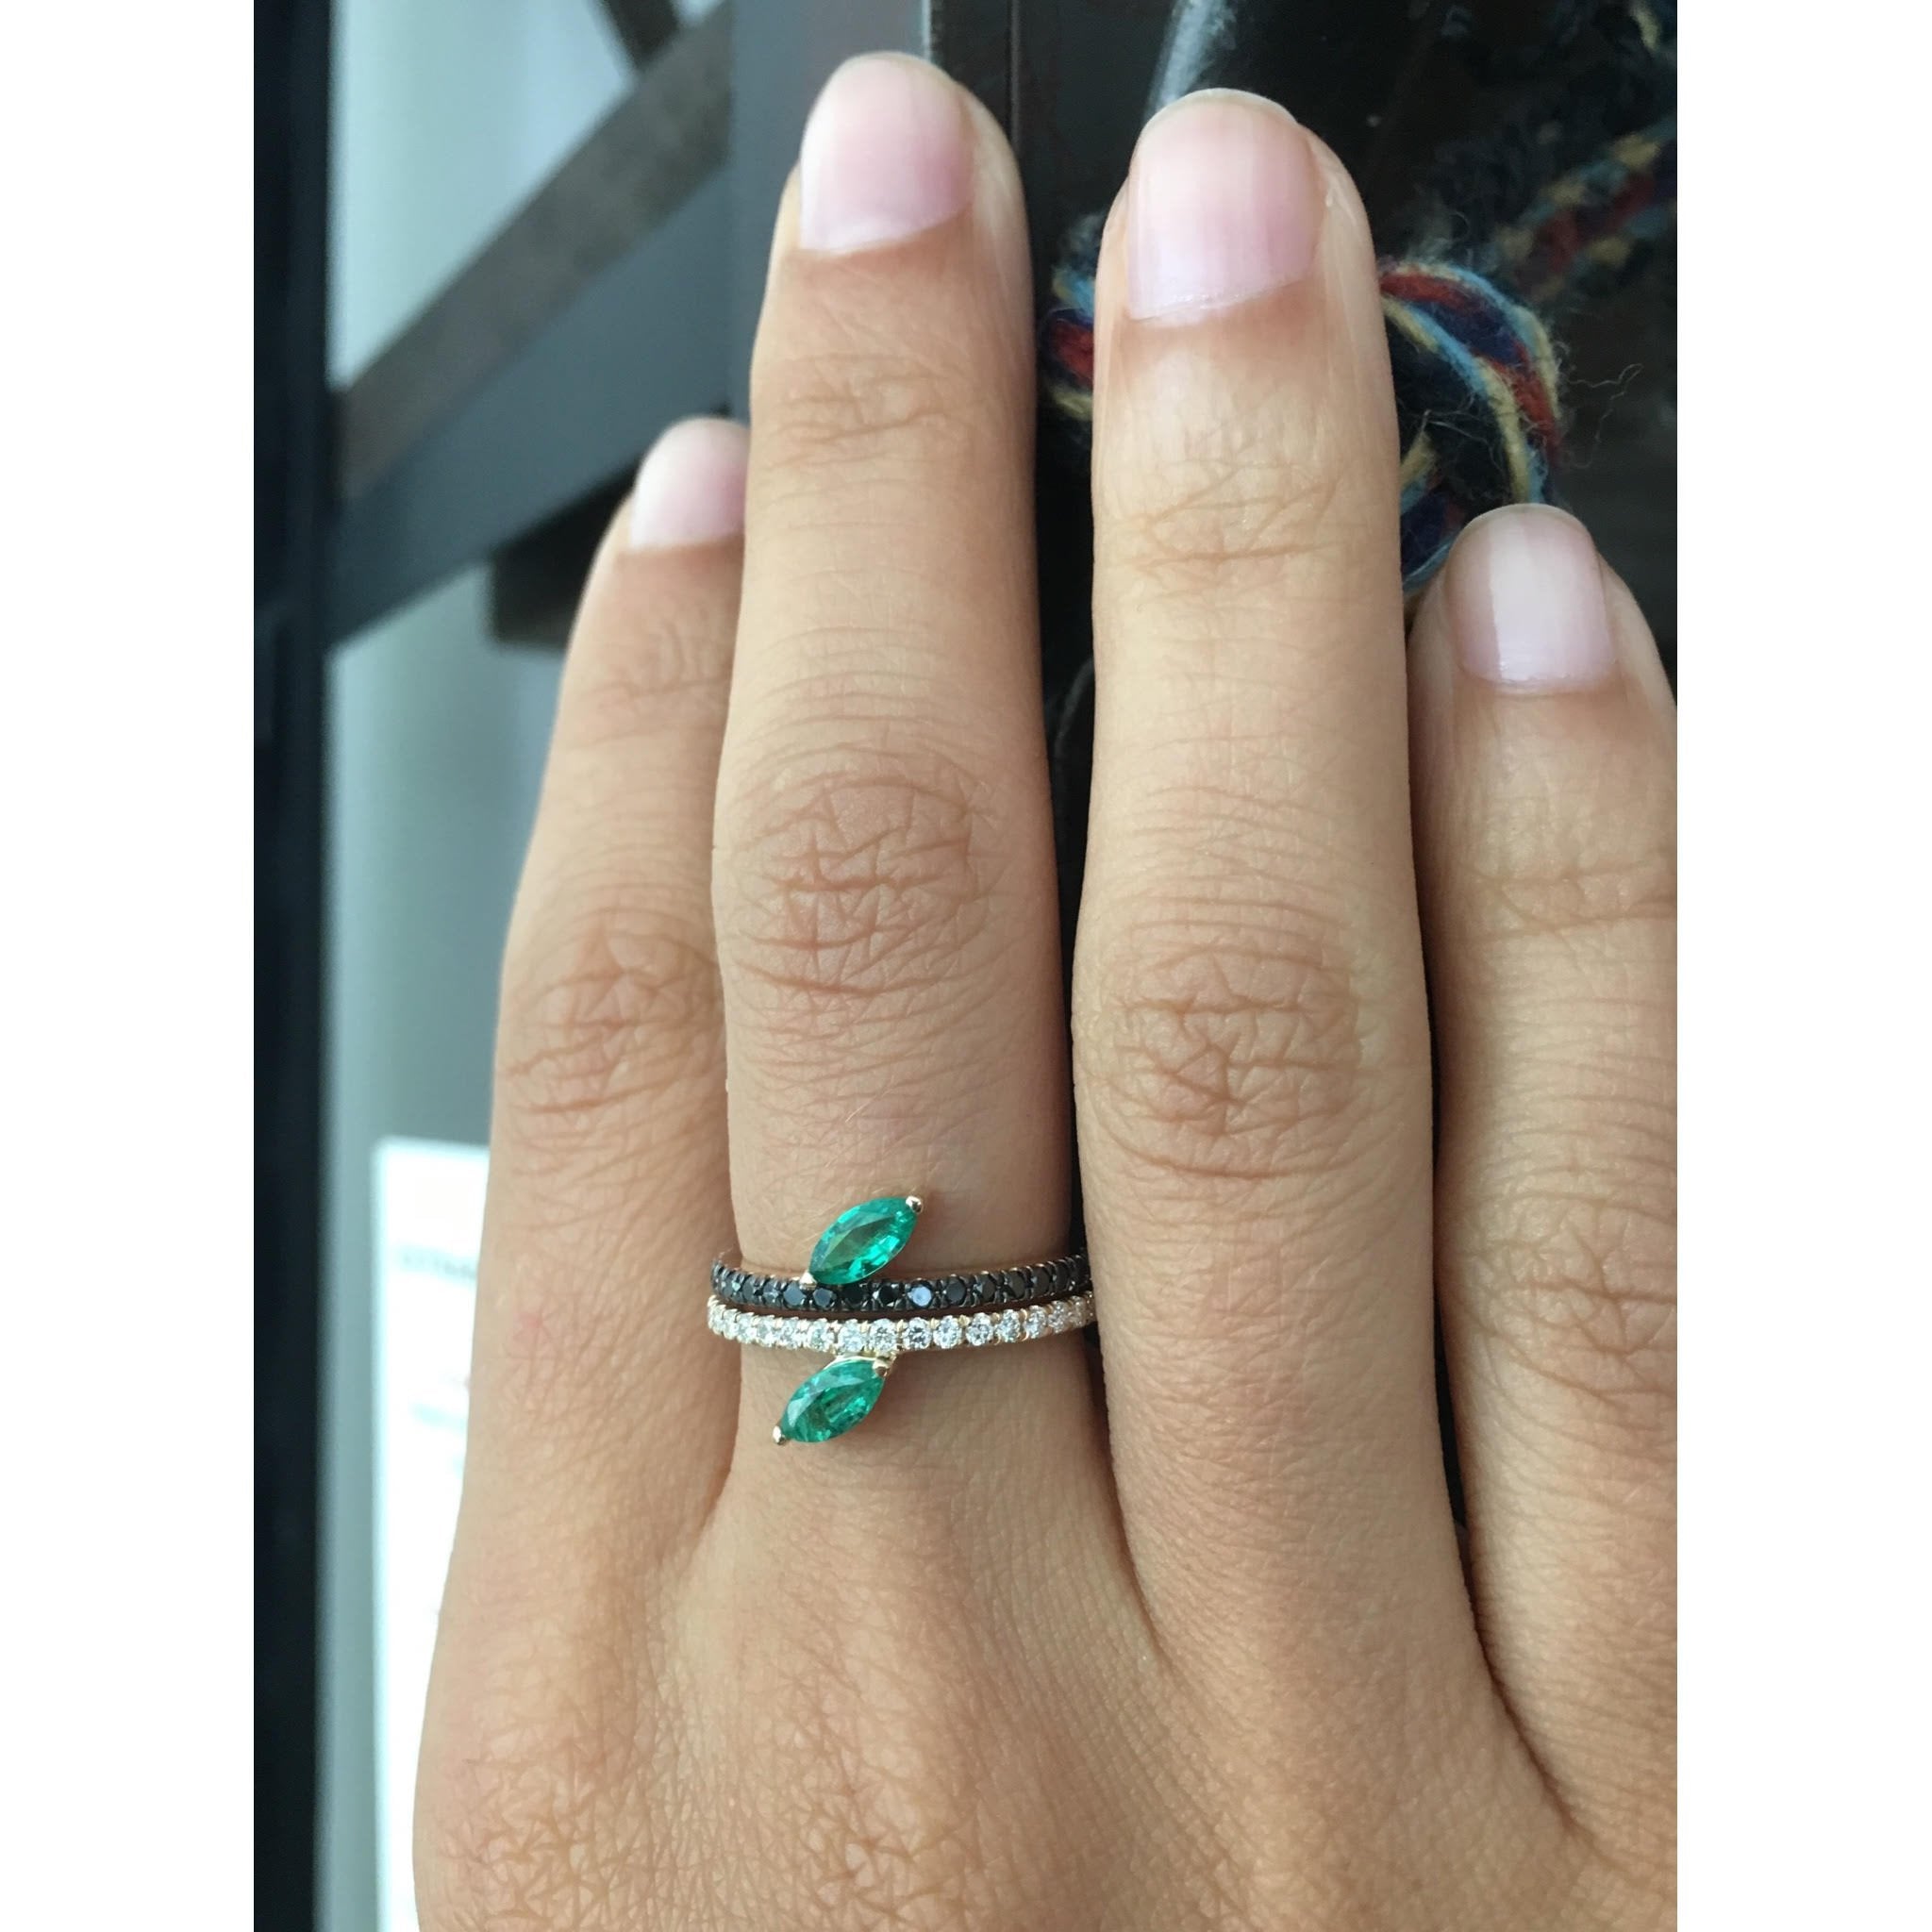 Defne Pavé Ring | Emerald with Black Diamonds